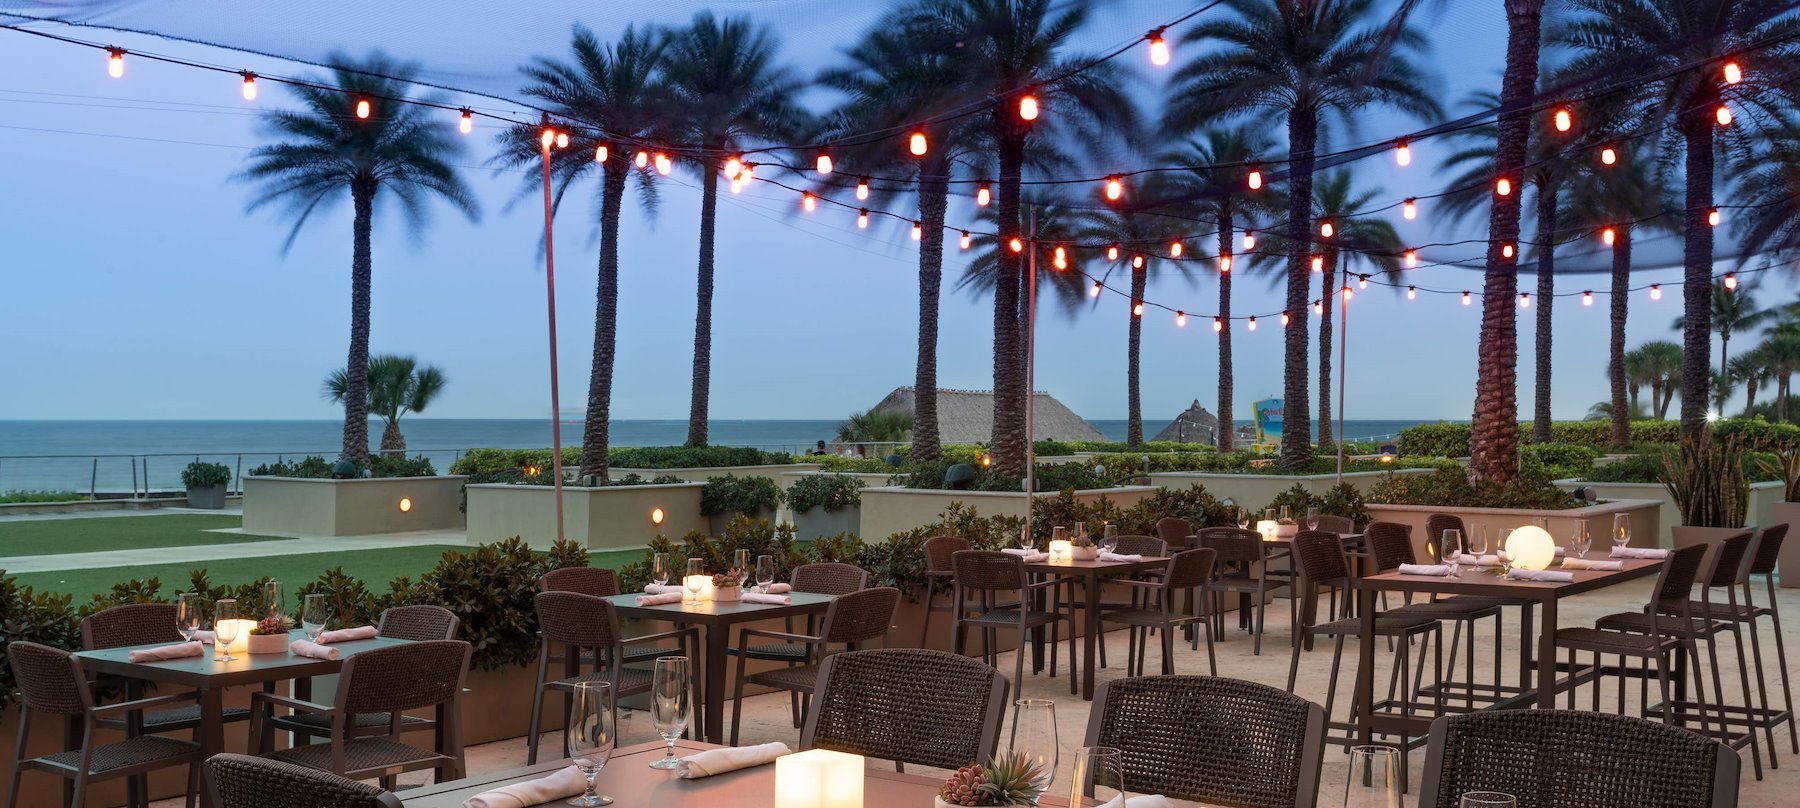 3030 Ocean | Oceanfront Fort Lauderdale Dining